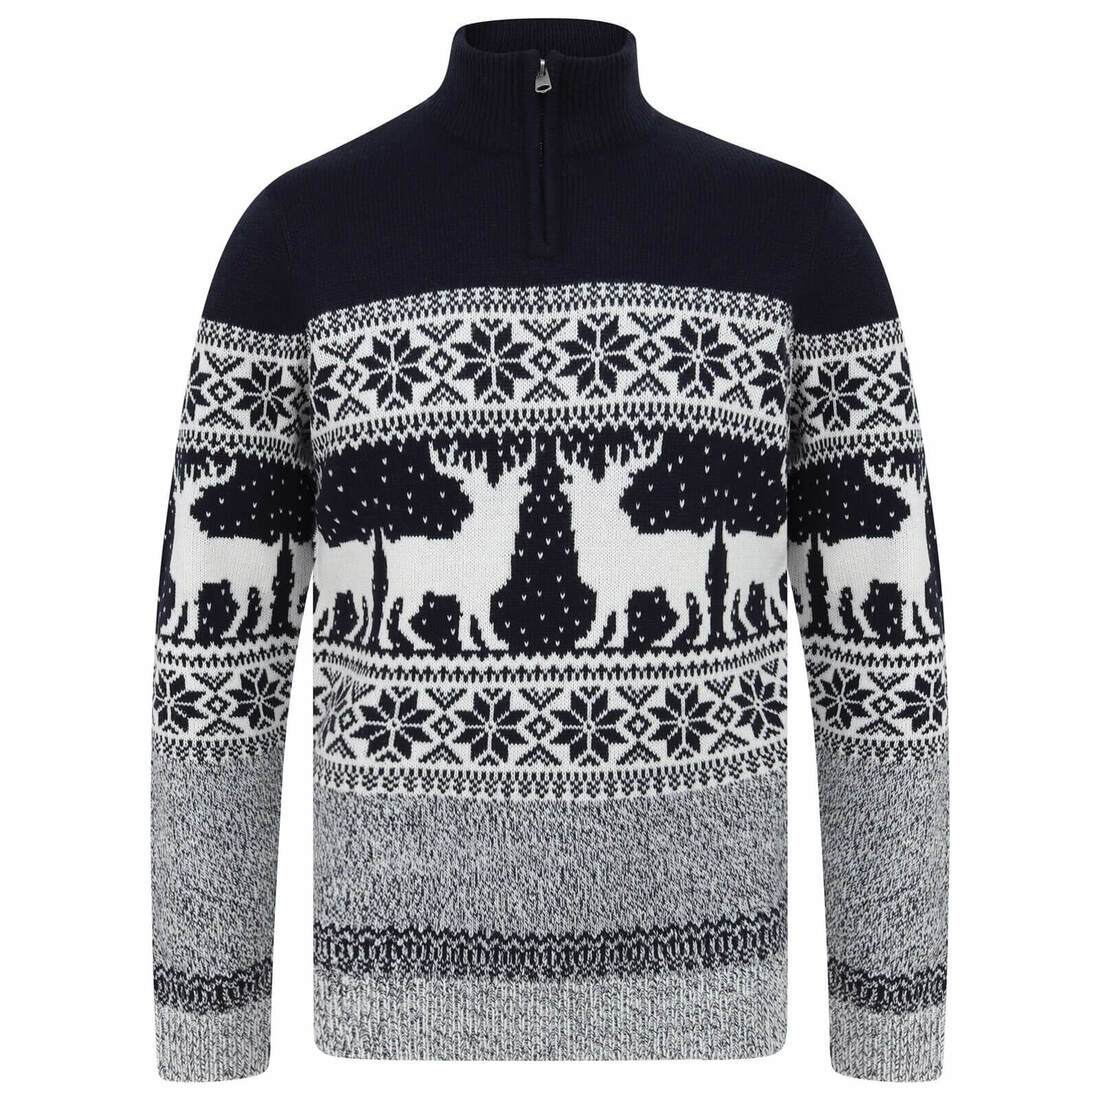 Mr Crimbo Mens Nordic Fairisle Christmas Knit Jumper Reindeer - MrCrimbo.co.uk -SRG1A14231_A - Ink -christmas knit jumper